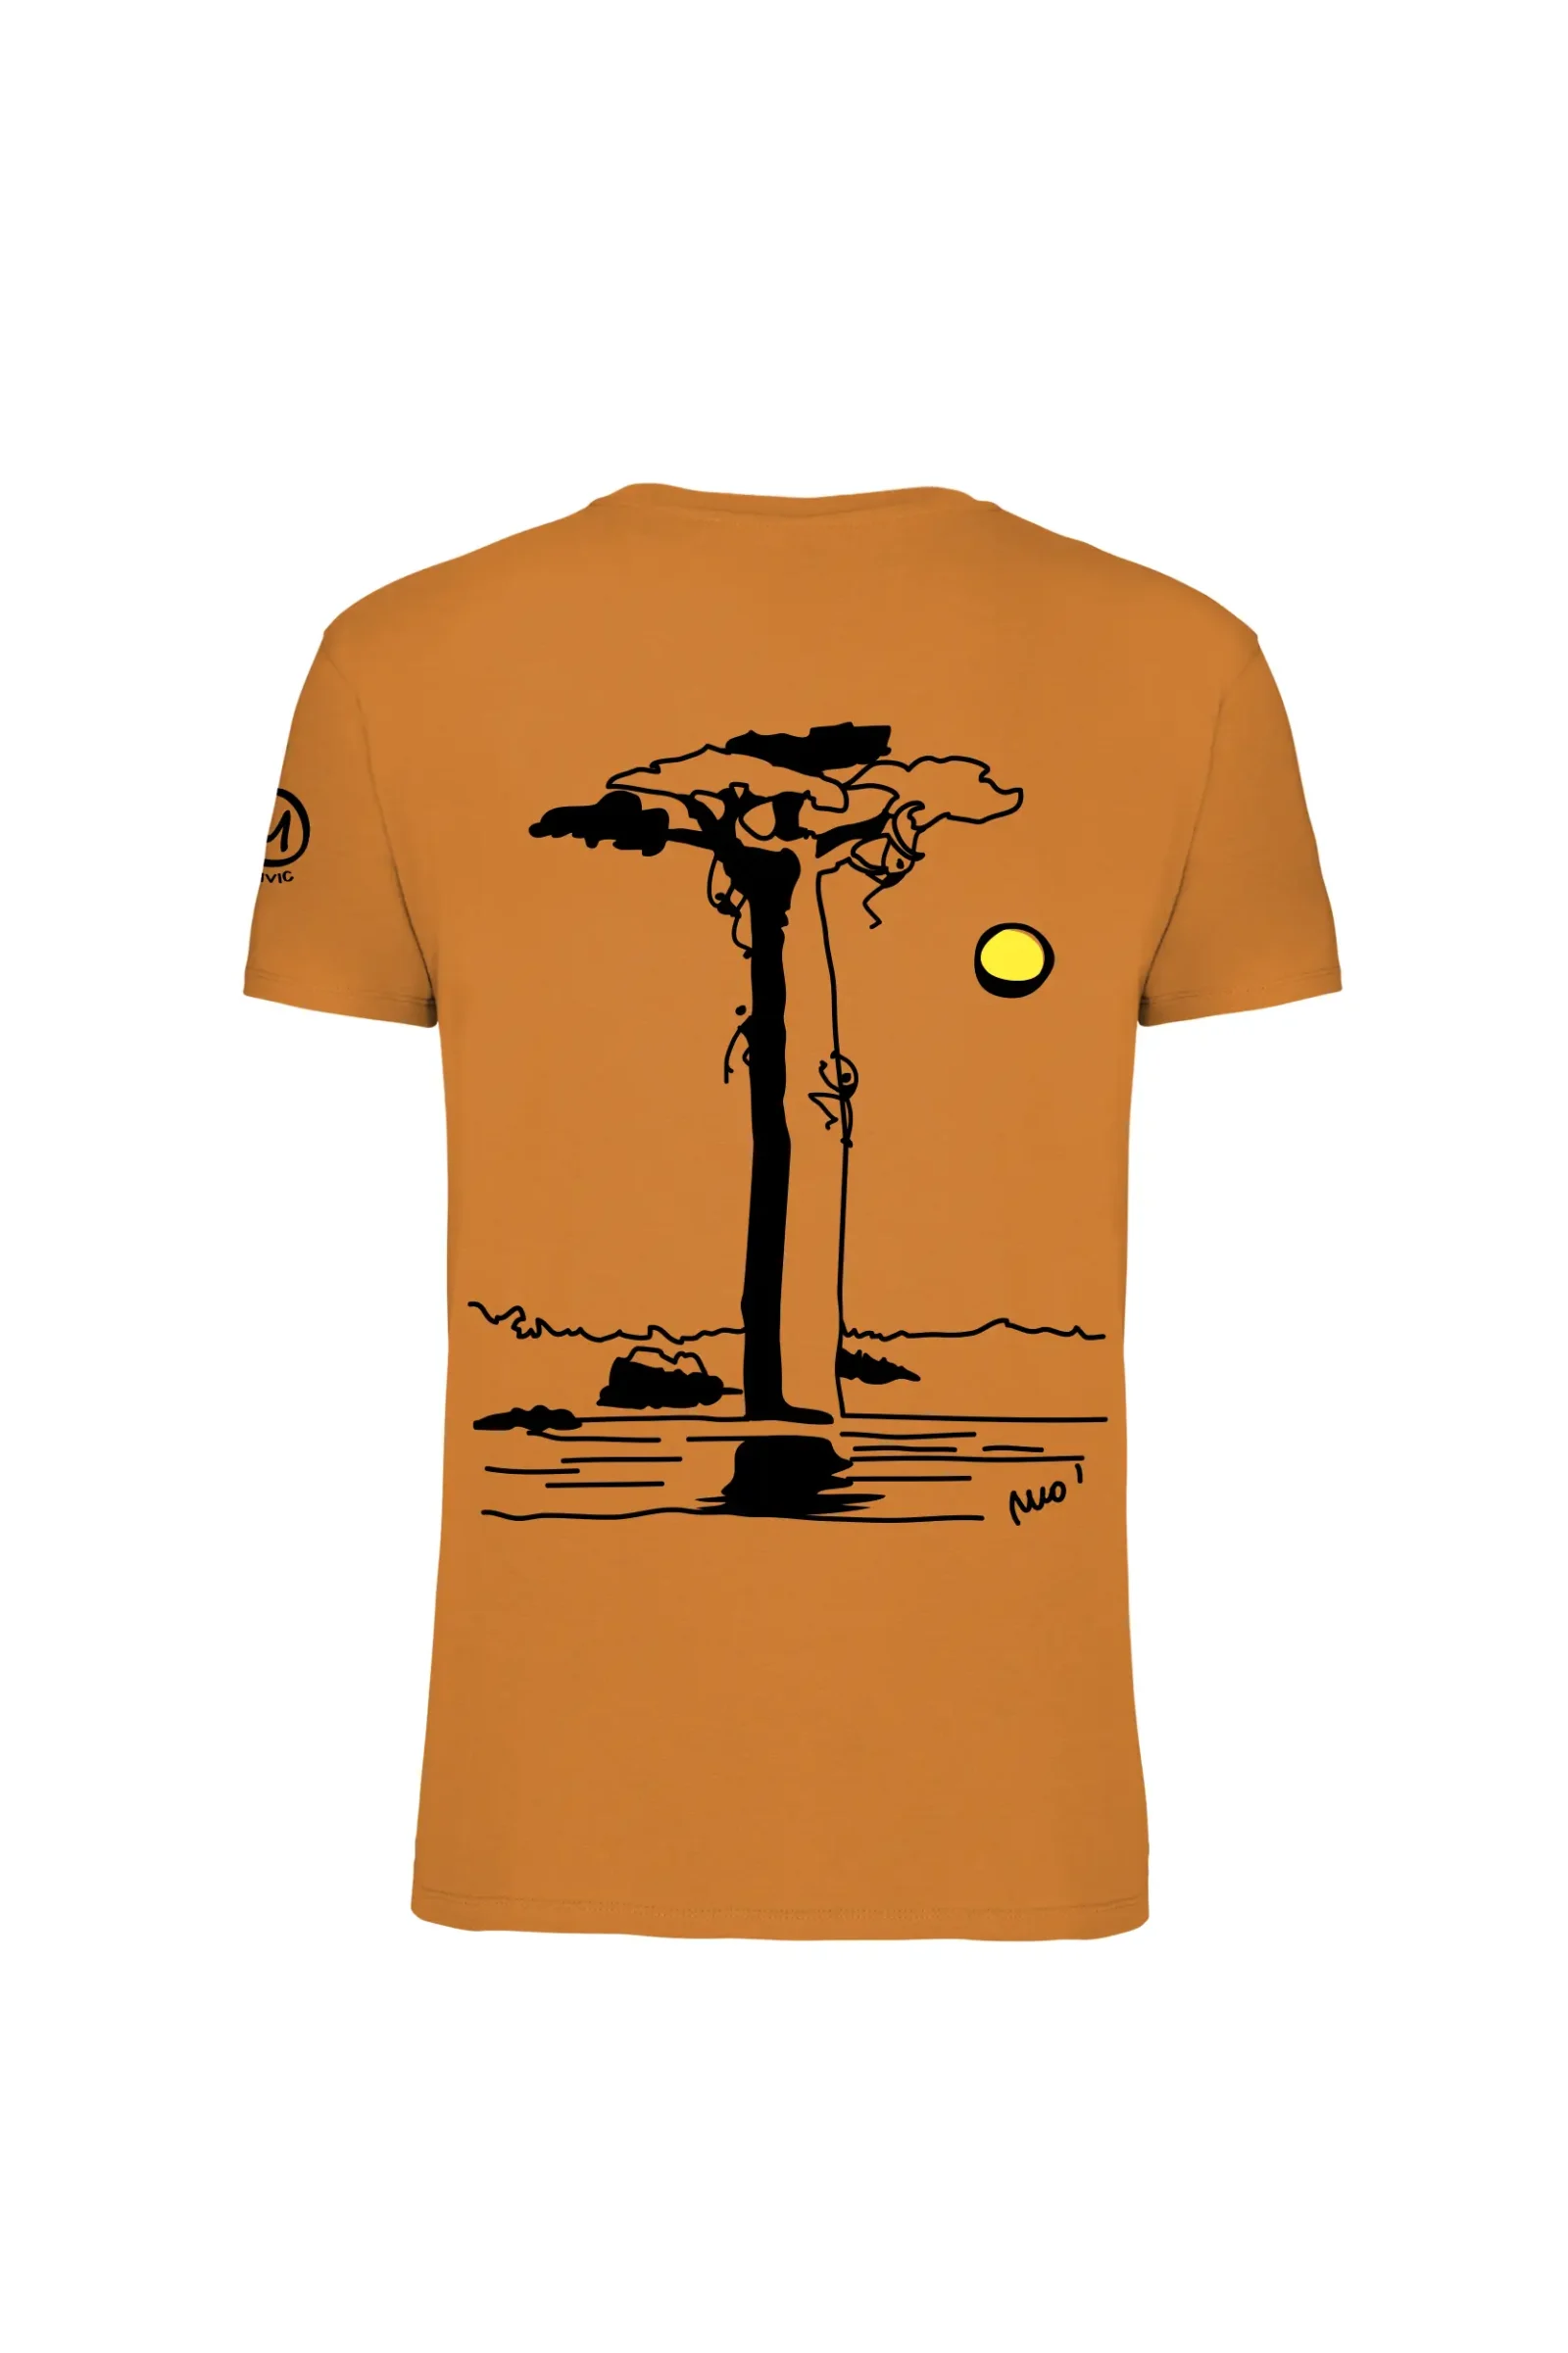 T-shirt d'escalade homme - coton bio orange - "Baobab" - HASH ORGANIC MONVIC